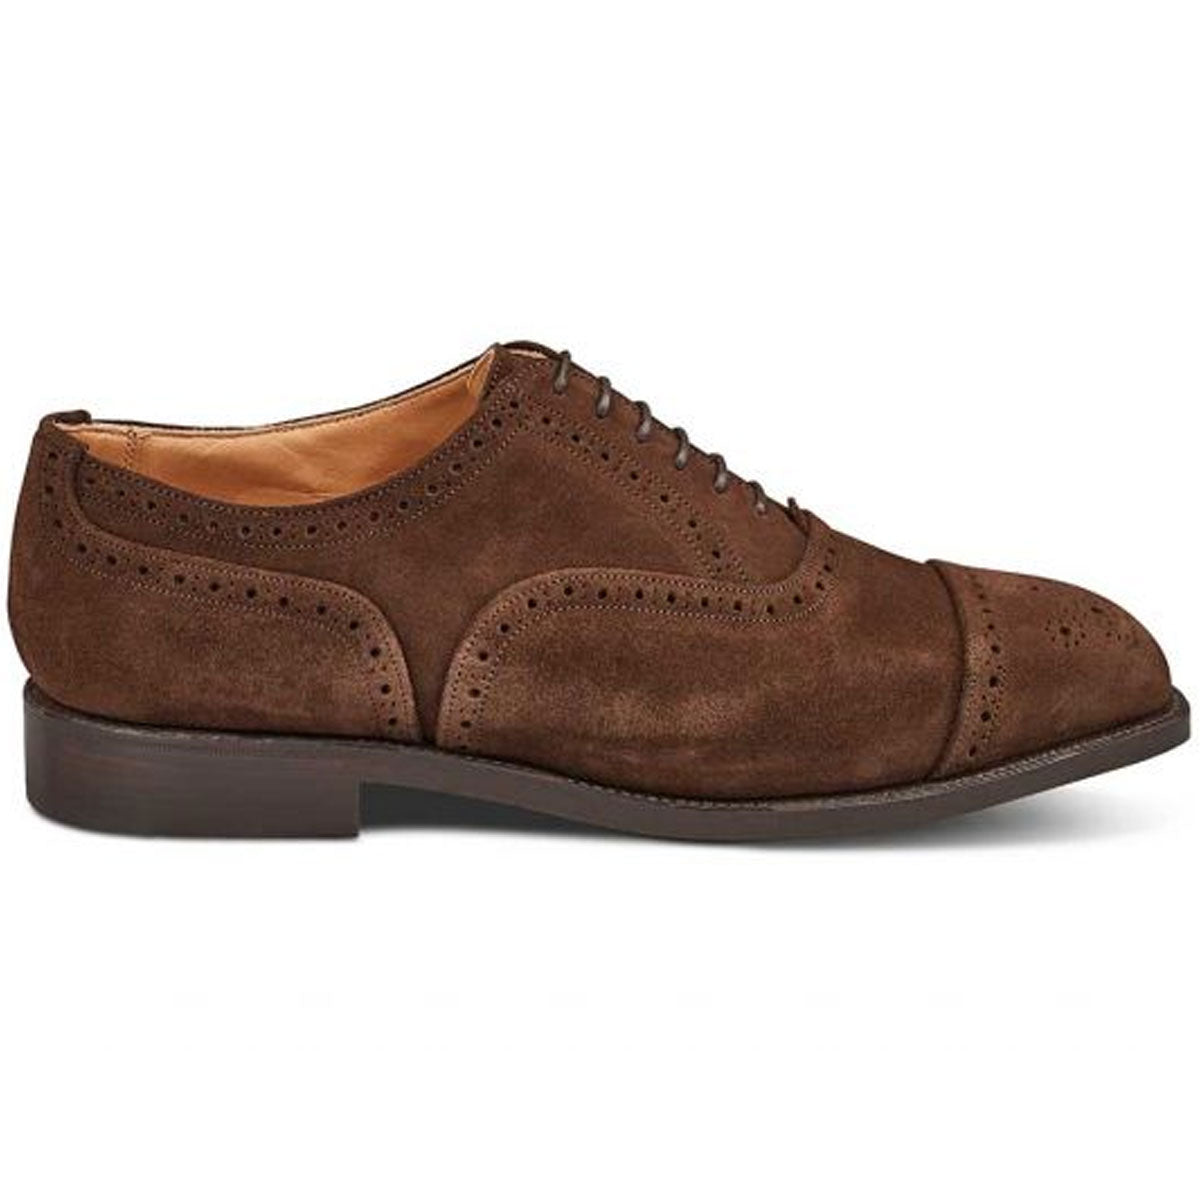 TRICKER'S Kensington Shoes - Mens - Chocolate Repello Suede